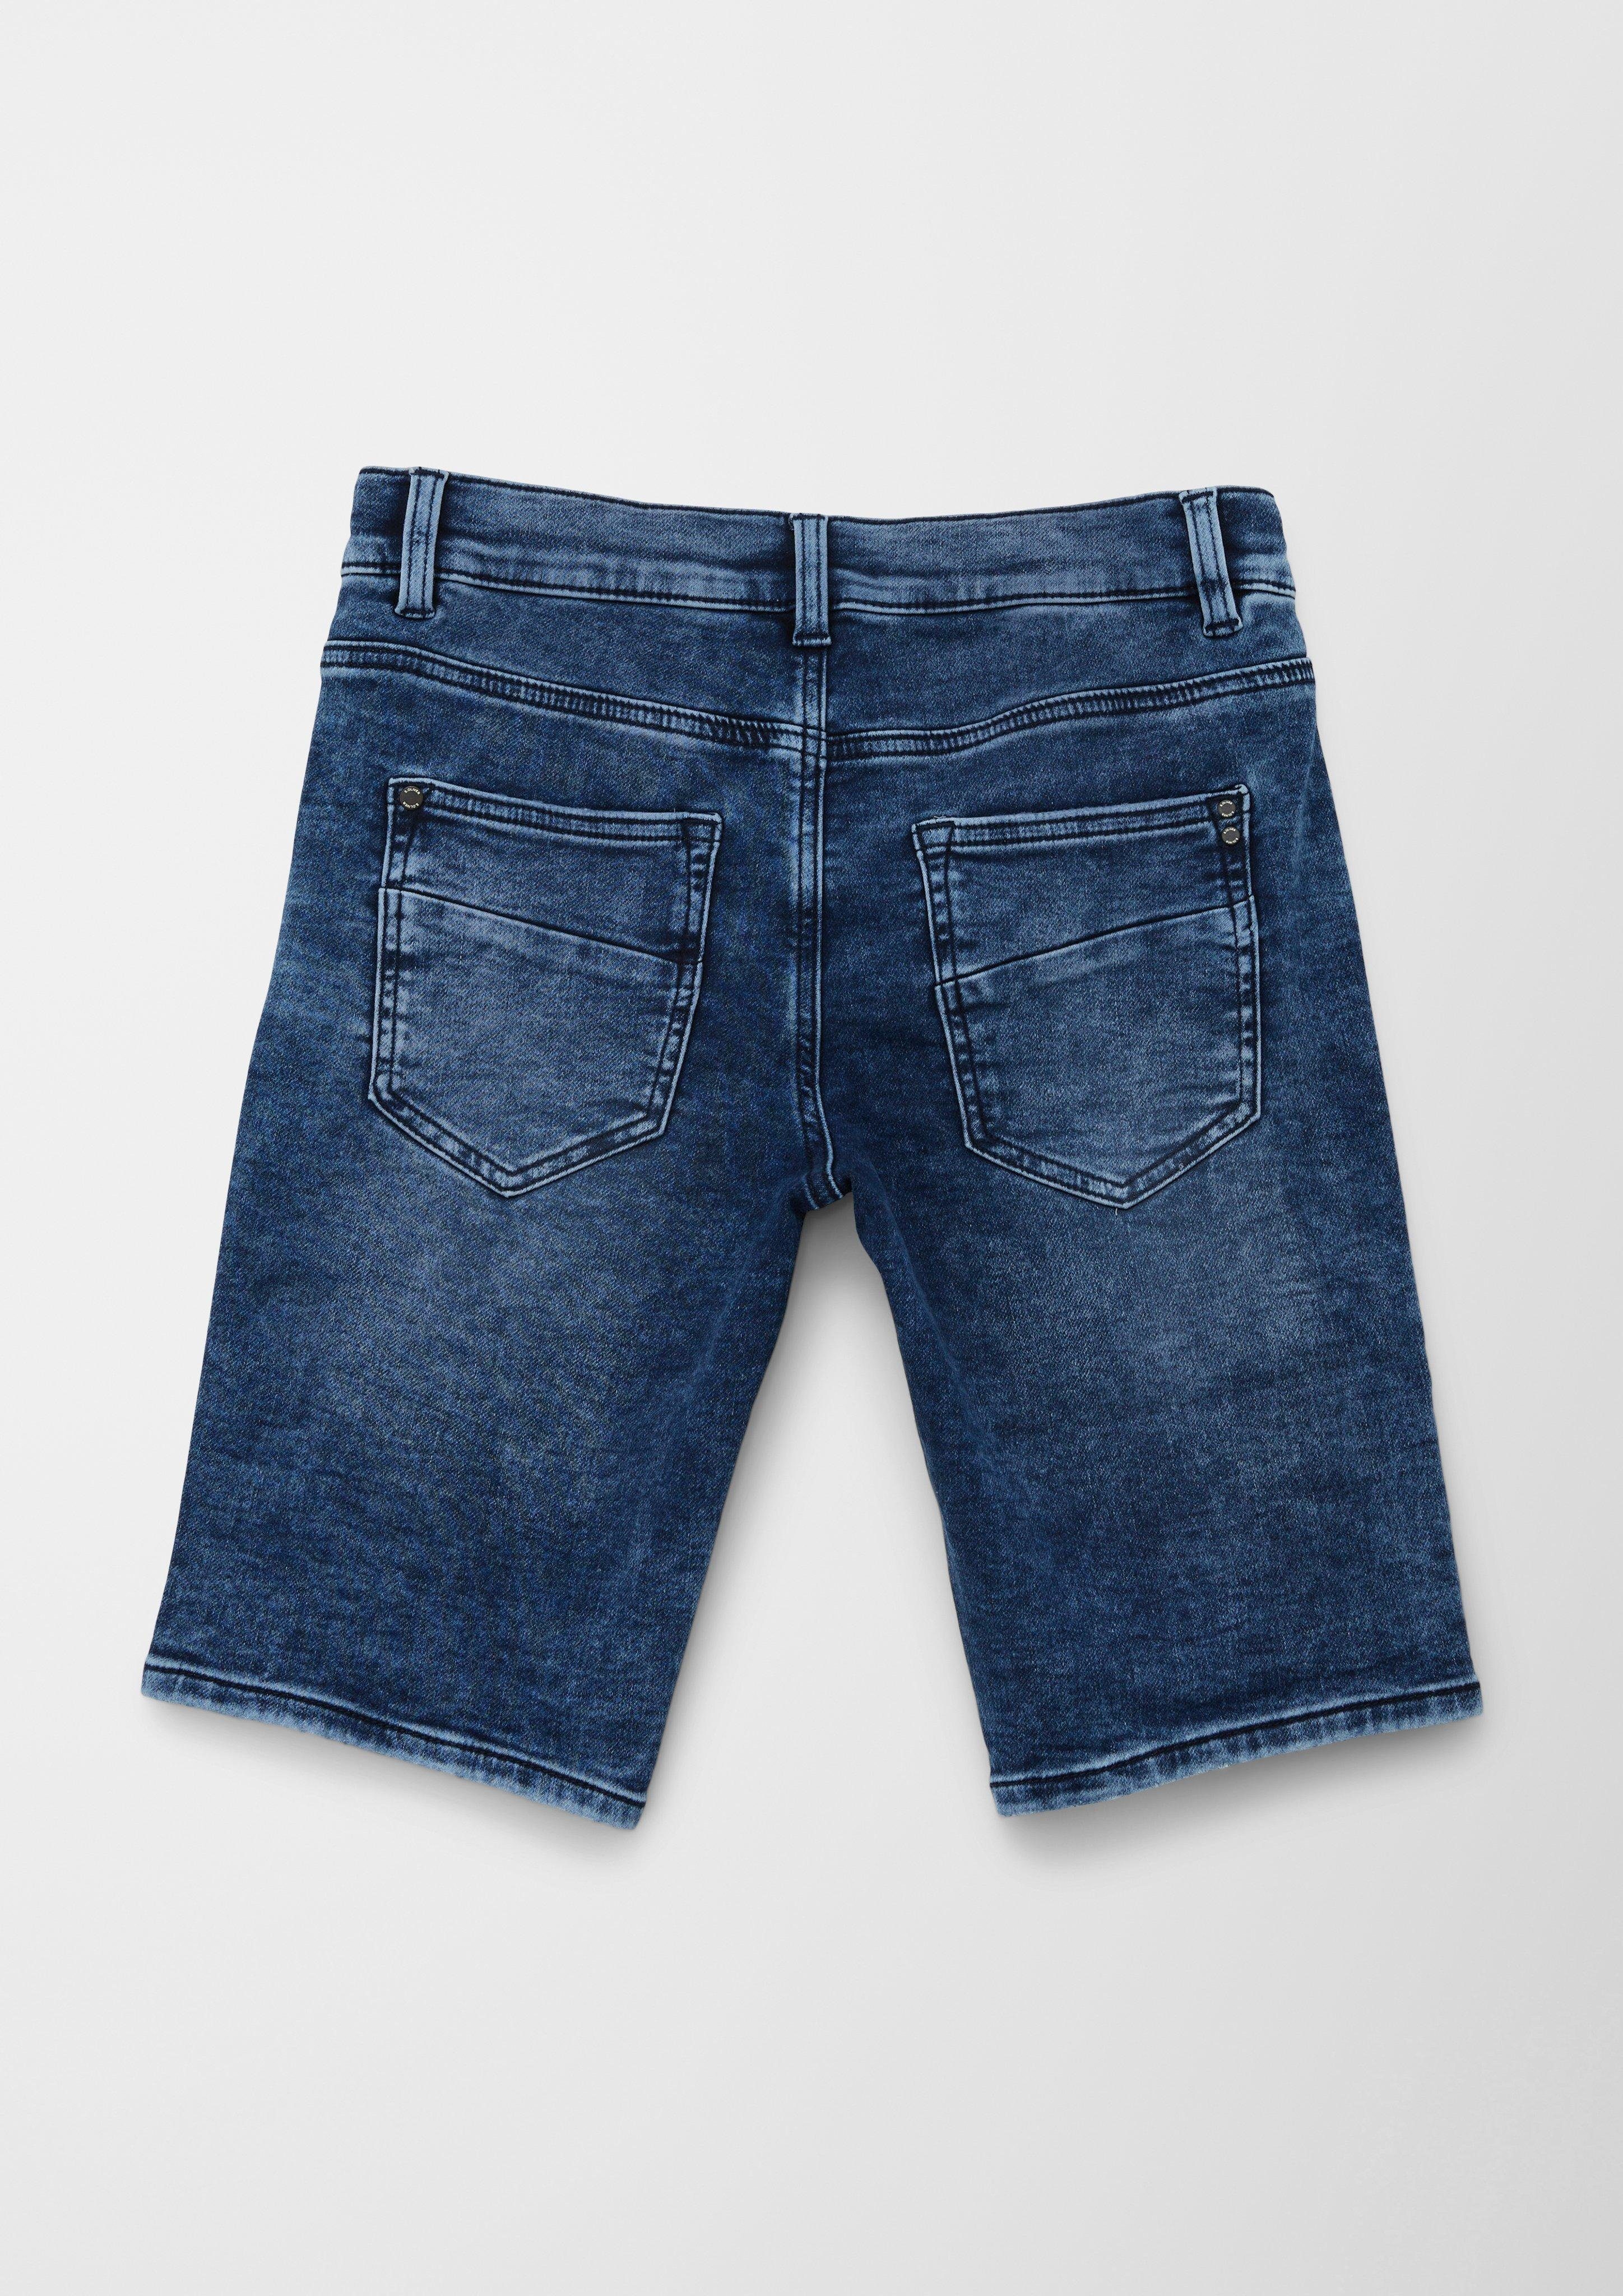 s.Oliver Jeansshorts Jeans-Bermuda Seattle Regular / Mid Waschung, / Fit Destroyes Leg Rise Slim 